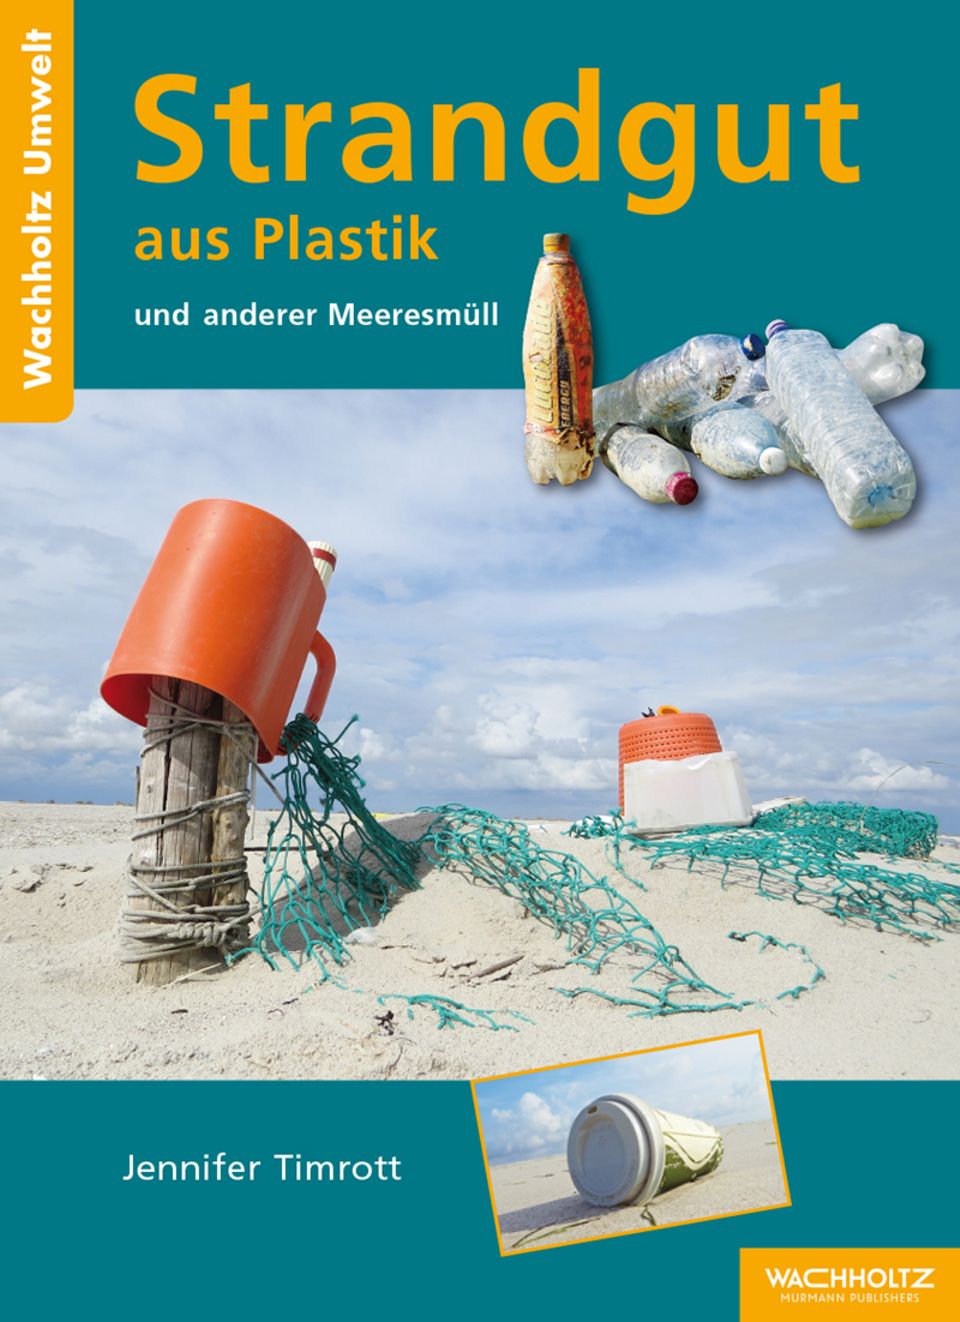 Strandgut aus Plastik